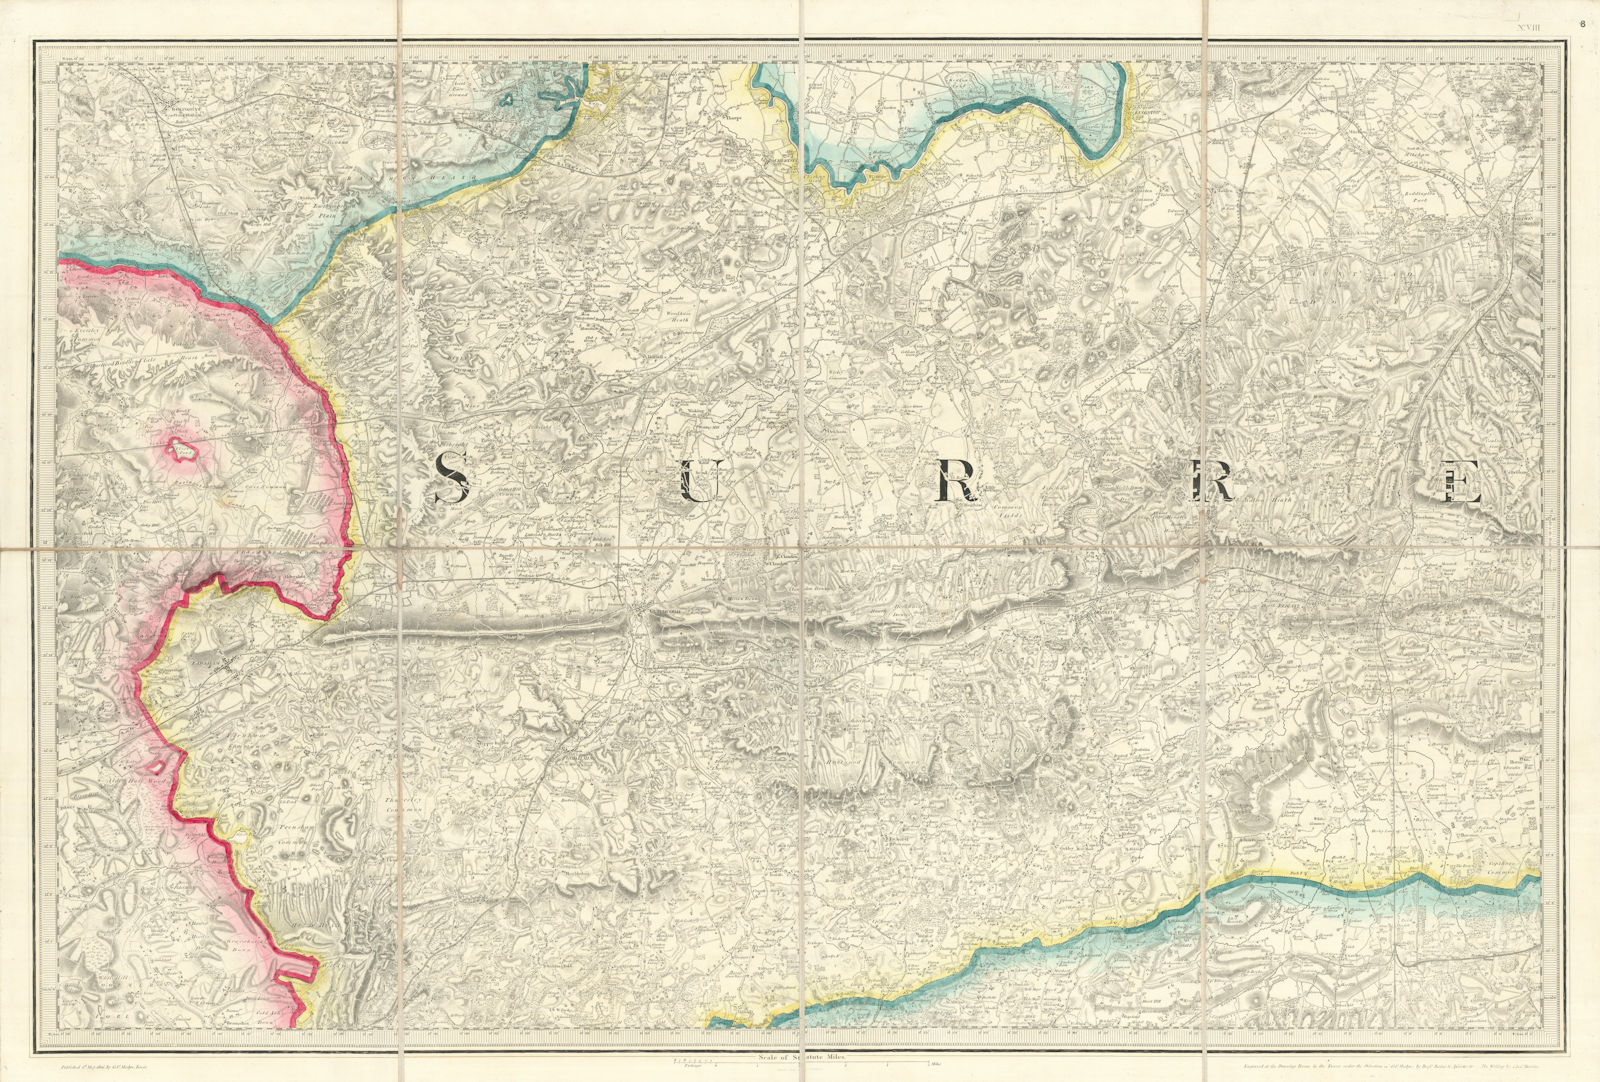 OS #8 North Downs, Surrey. Croydon Guildford Reigate Farnham Low Weald 1816 map